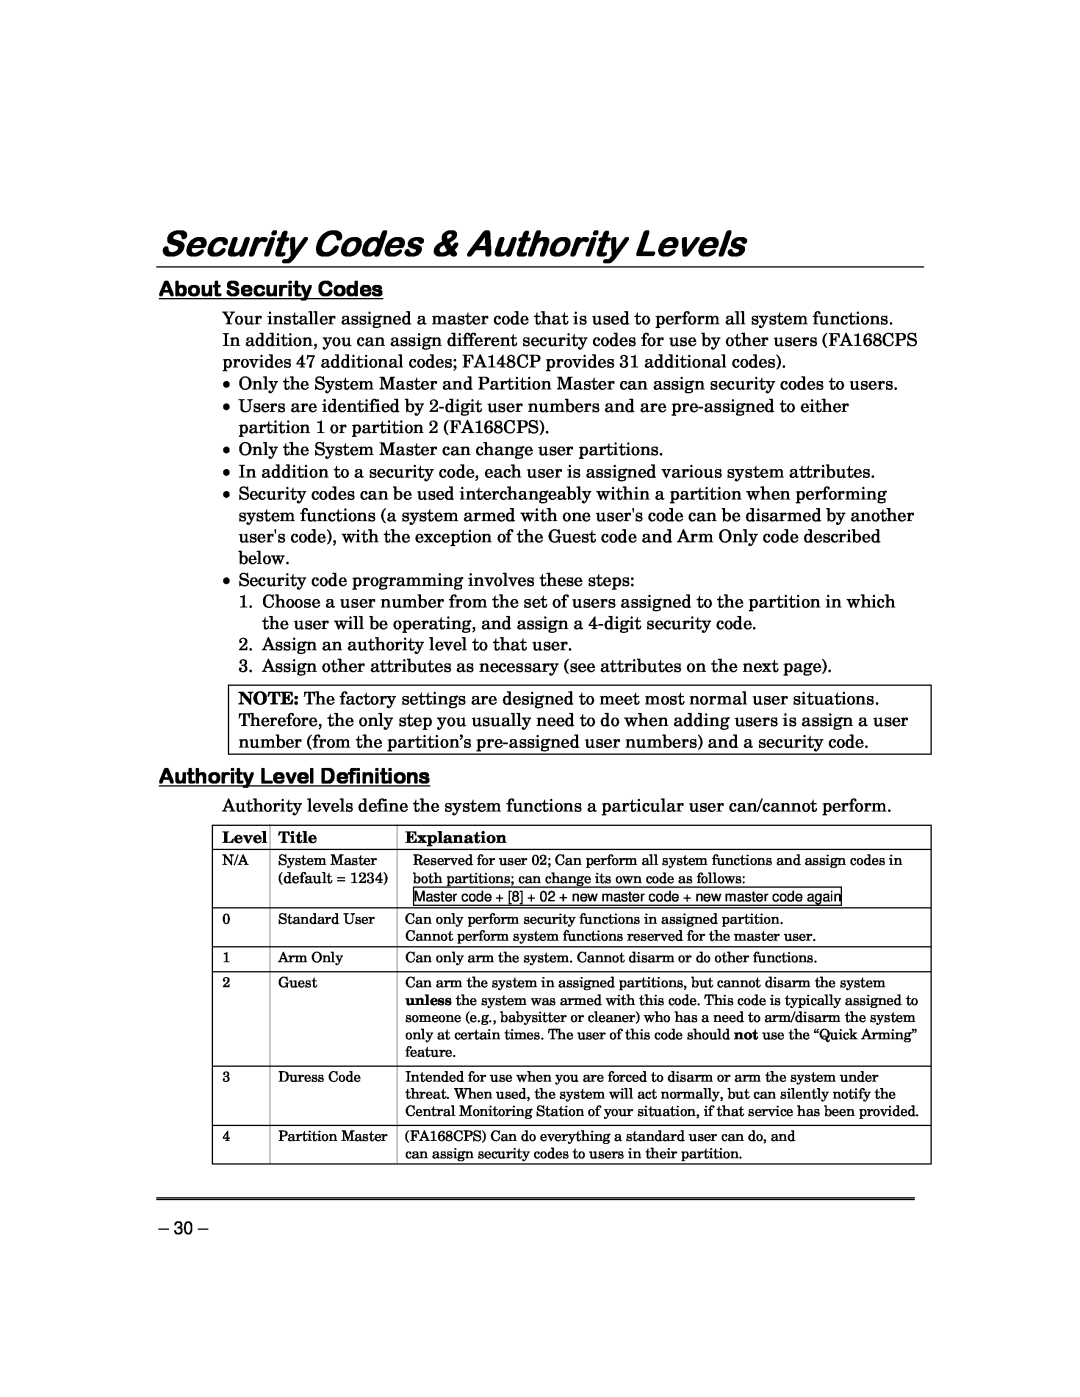 Garmin FA168CPS manual Security Codes & Authority Levels, About Security Codes, Authority Level Definitions 